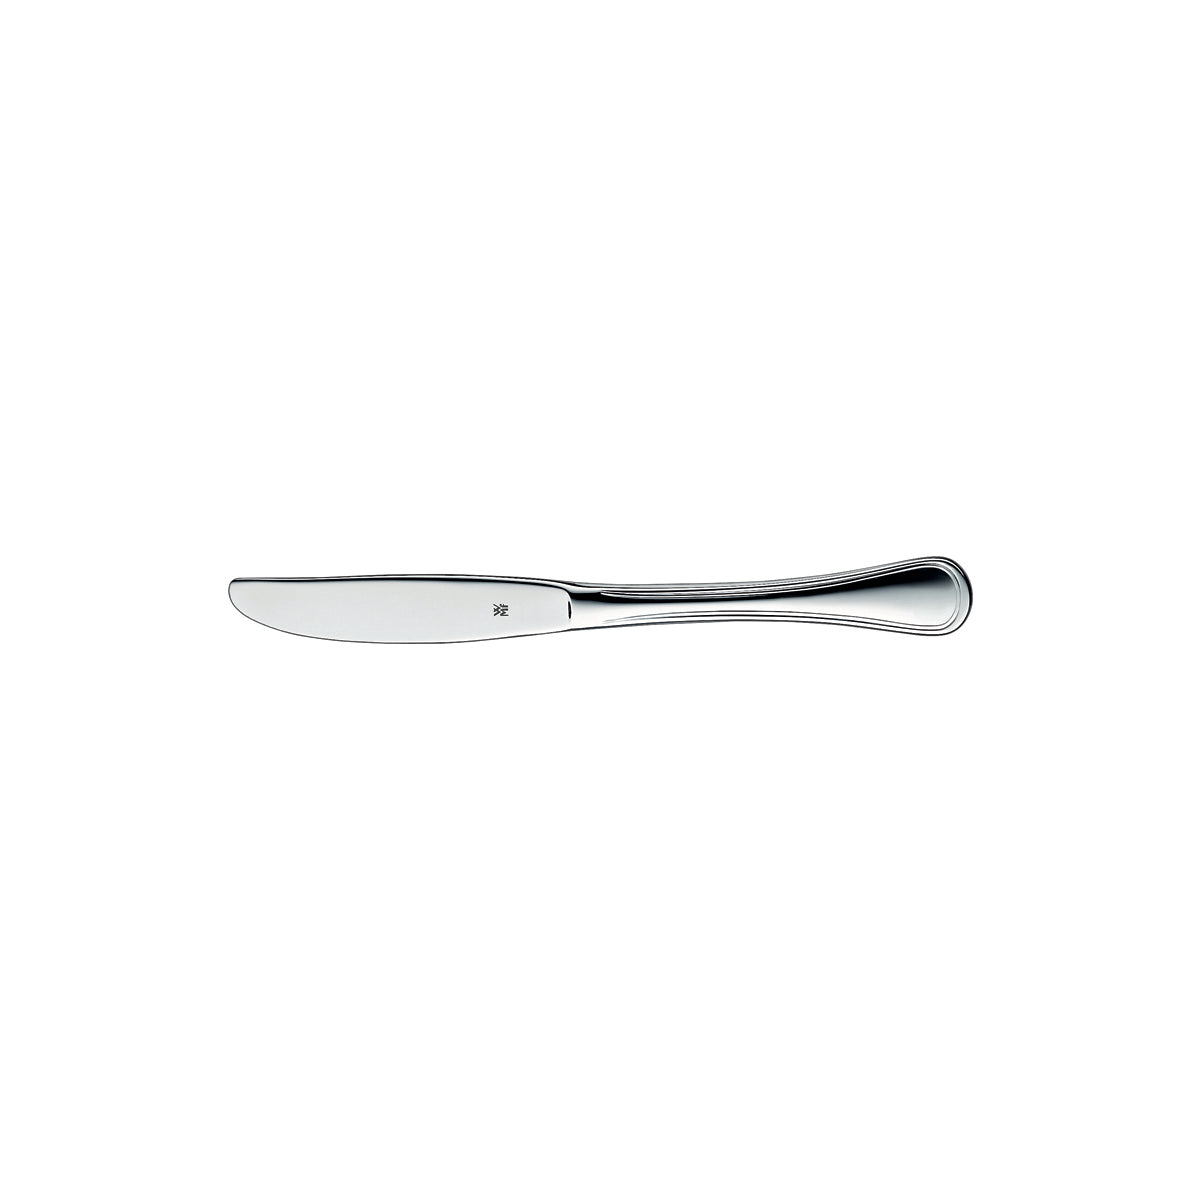 12.0203.6049 WMF Contour Table Knife Stainless Steel Tomkin Australia Hospitality Supplies